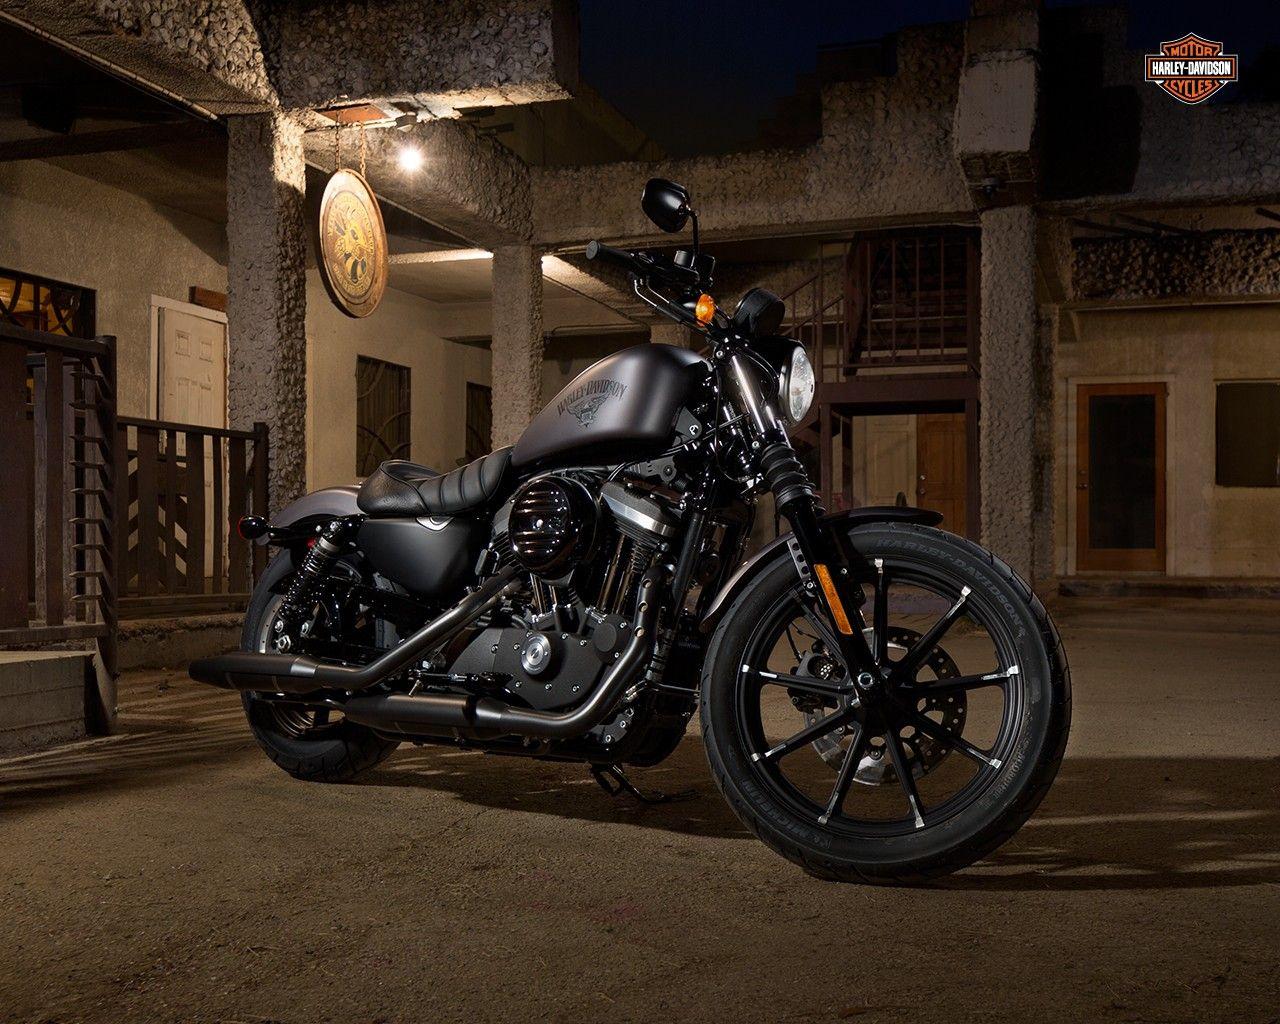 Harley Davidson Iron 883 Receives Suspension Upgrades